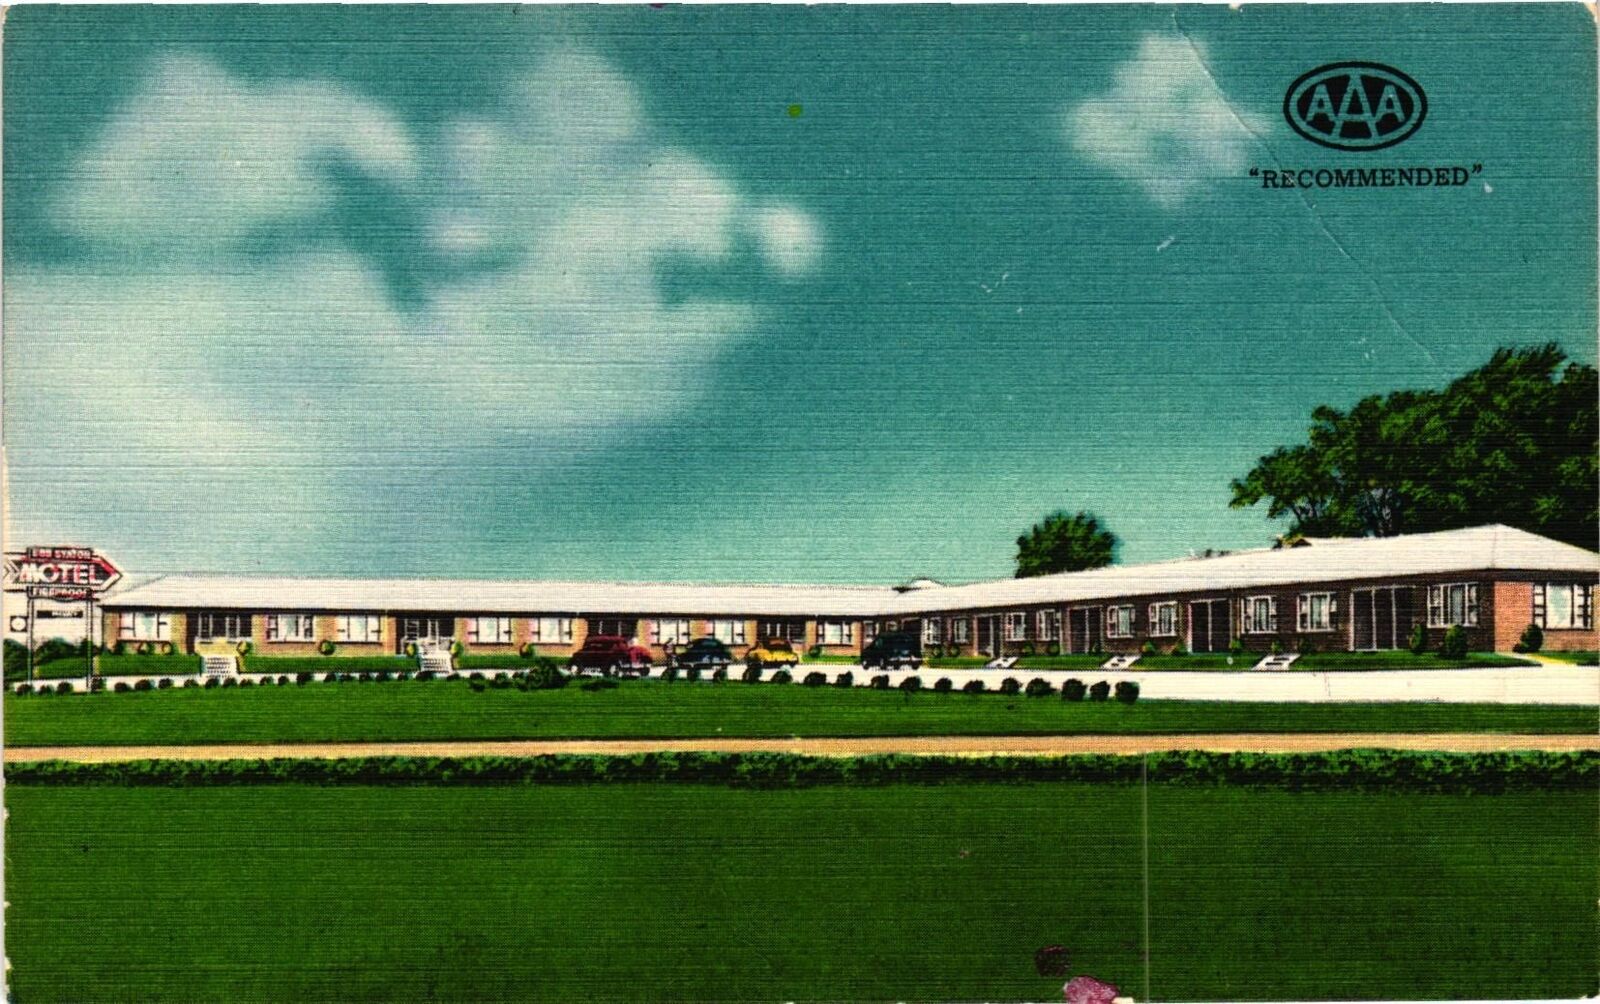 Vintage Postcard- BOB Staton Motel, Chillicothe, MO. Early 1900s